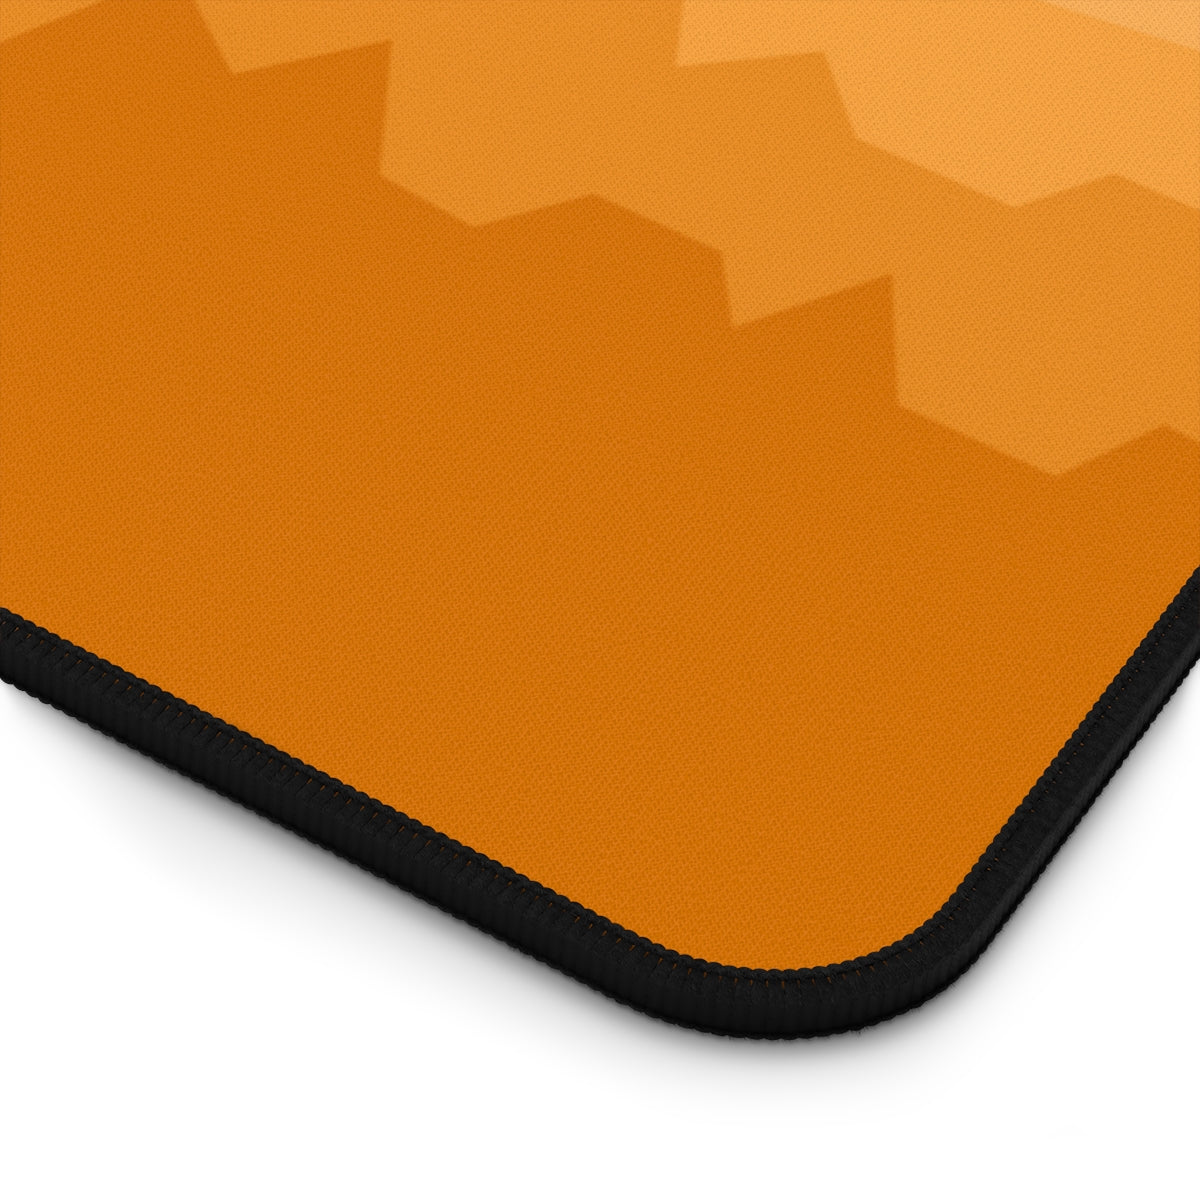 Orange Abstract Mountains Desk Mat - Desk Cookies